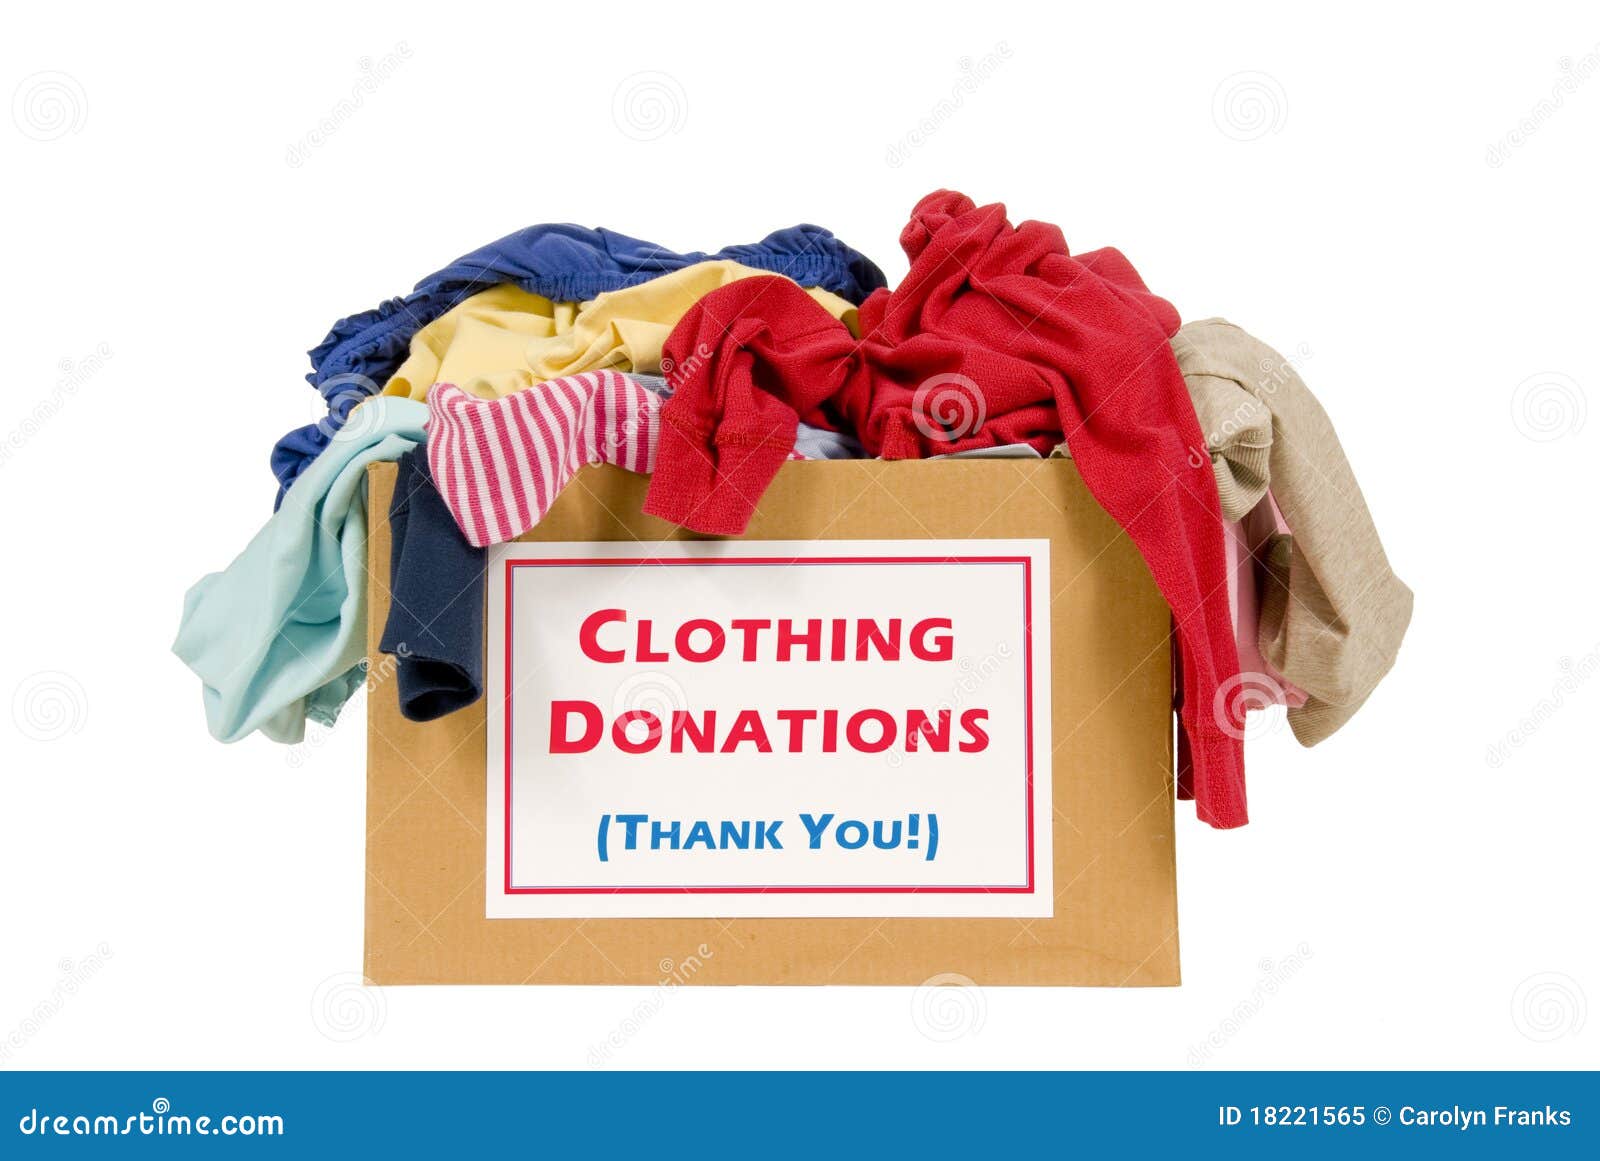 clothes donation clipart - photo #3